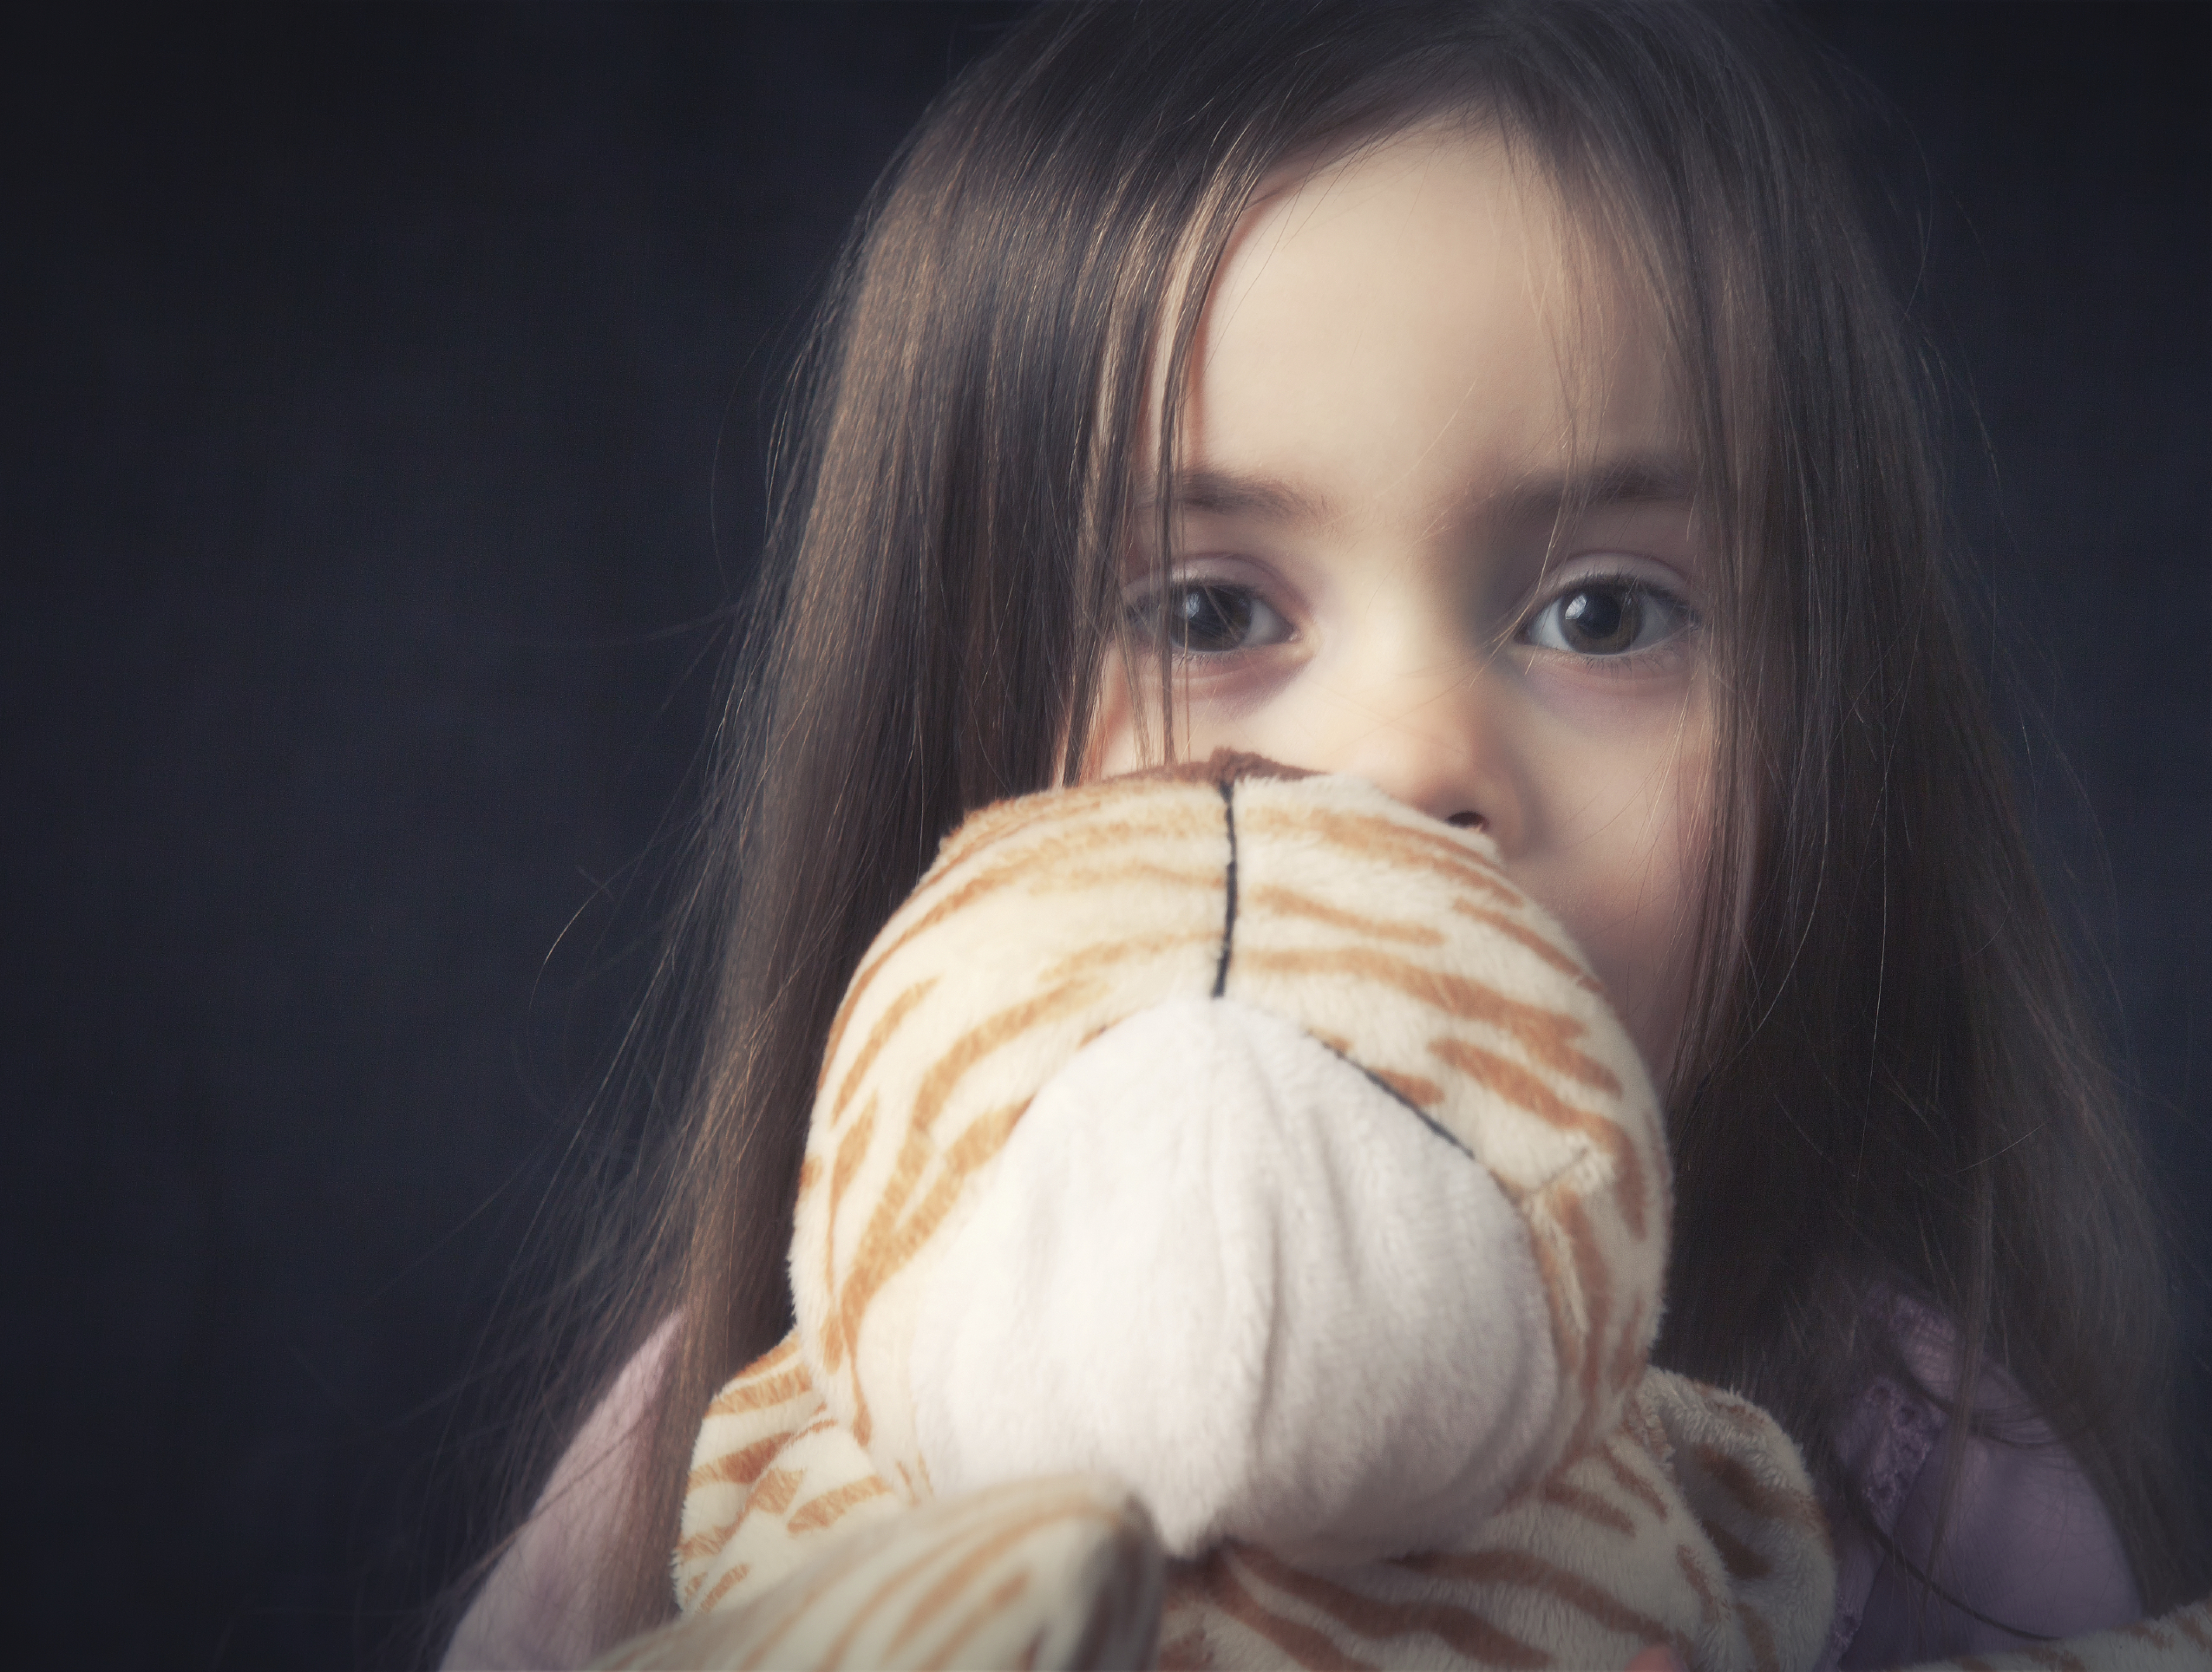 anxious little girl with stuffed animal